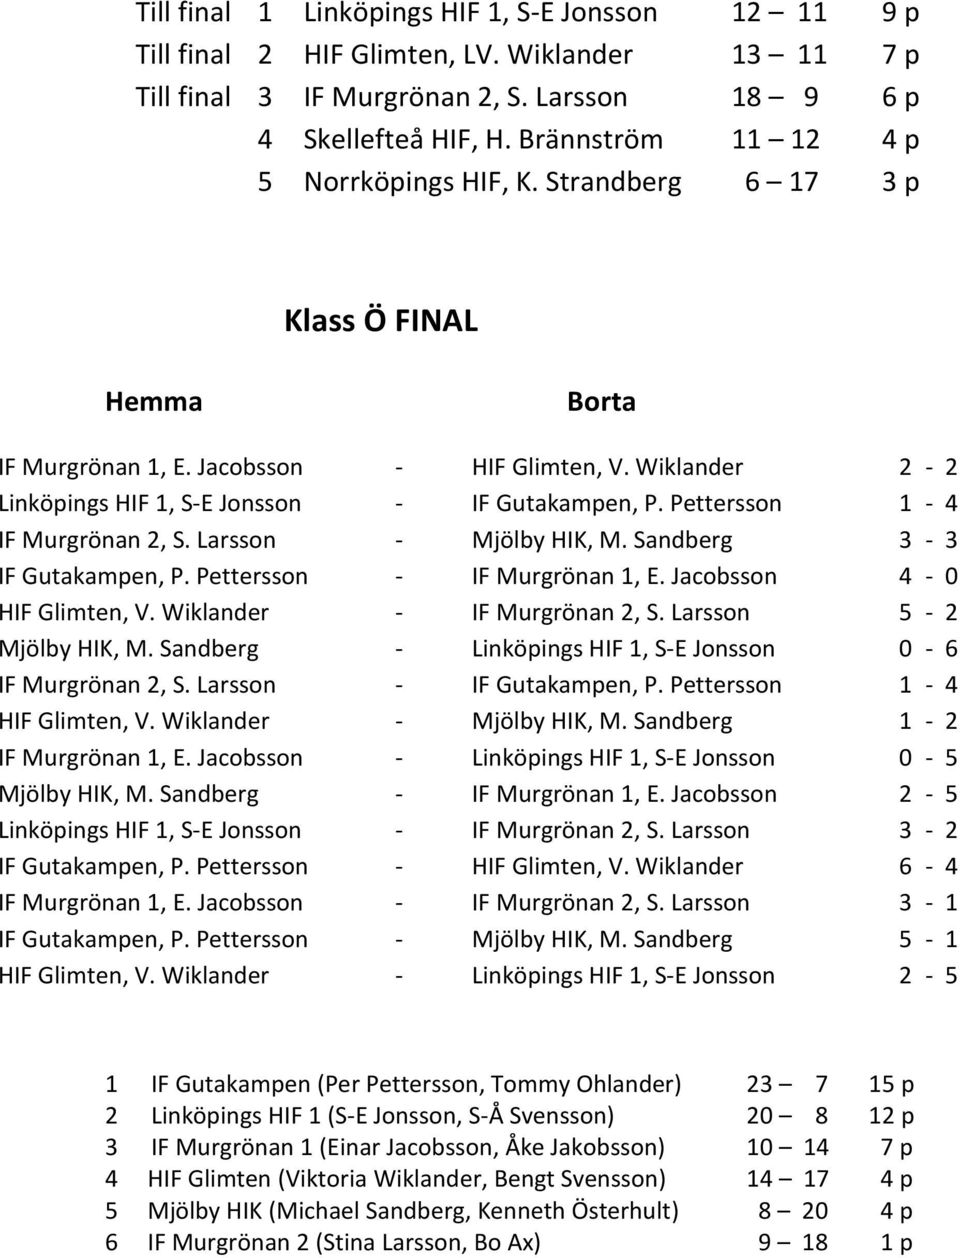 Pettersson 1-4 IF Murgrönan 2, S. Larsson - Mjölby HIK, M. Sandberg 3-3 IF Gutakampen, P. Pettersson - IF Murgrönan 1, E. Jacobsson 4-0 HIF Glimten, V. Wiklander - IF Murgrönan 2, S.